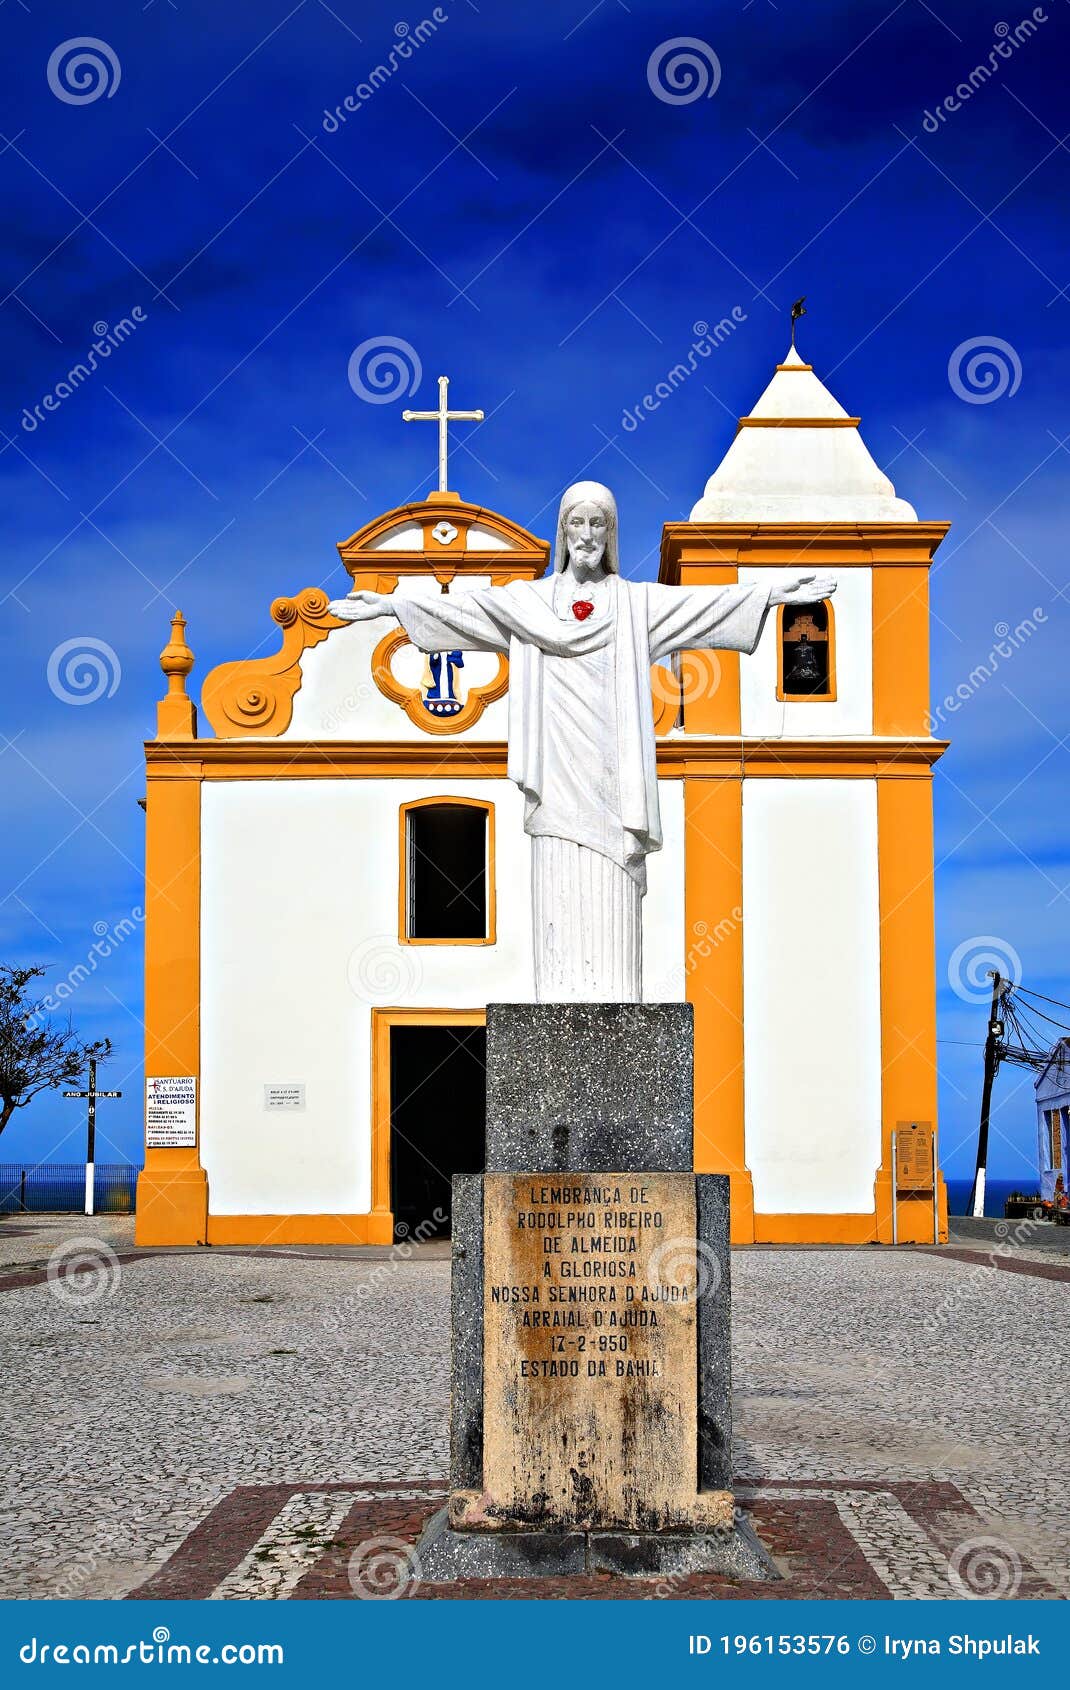 church nossa senhora d`ajuda, porto seguro, bahia, brazil, south america. statue of jesus christ in the